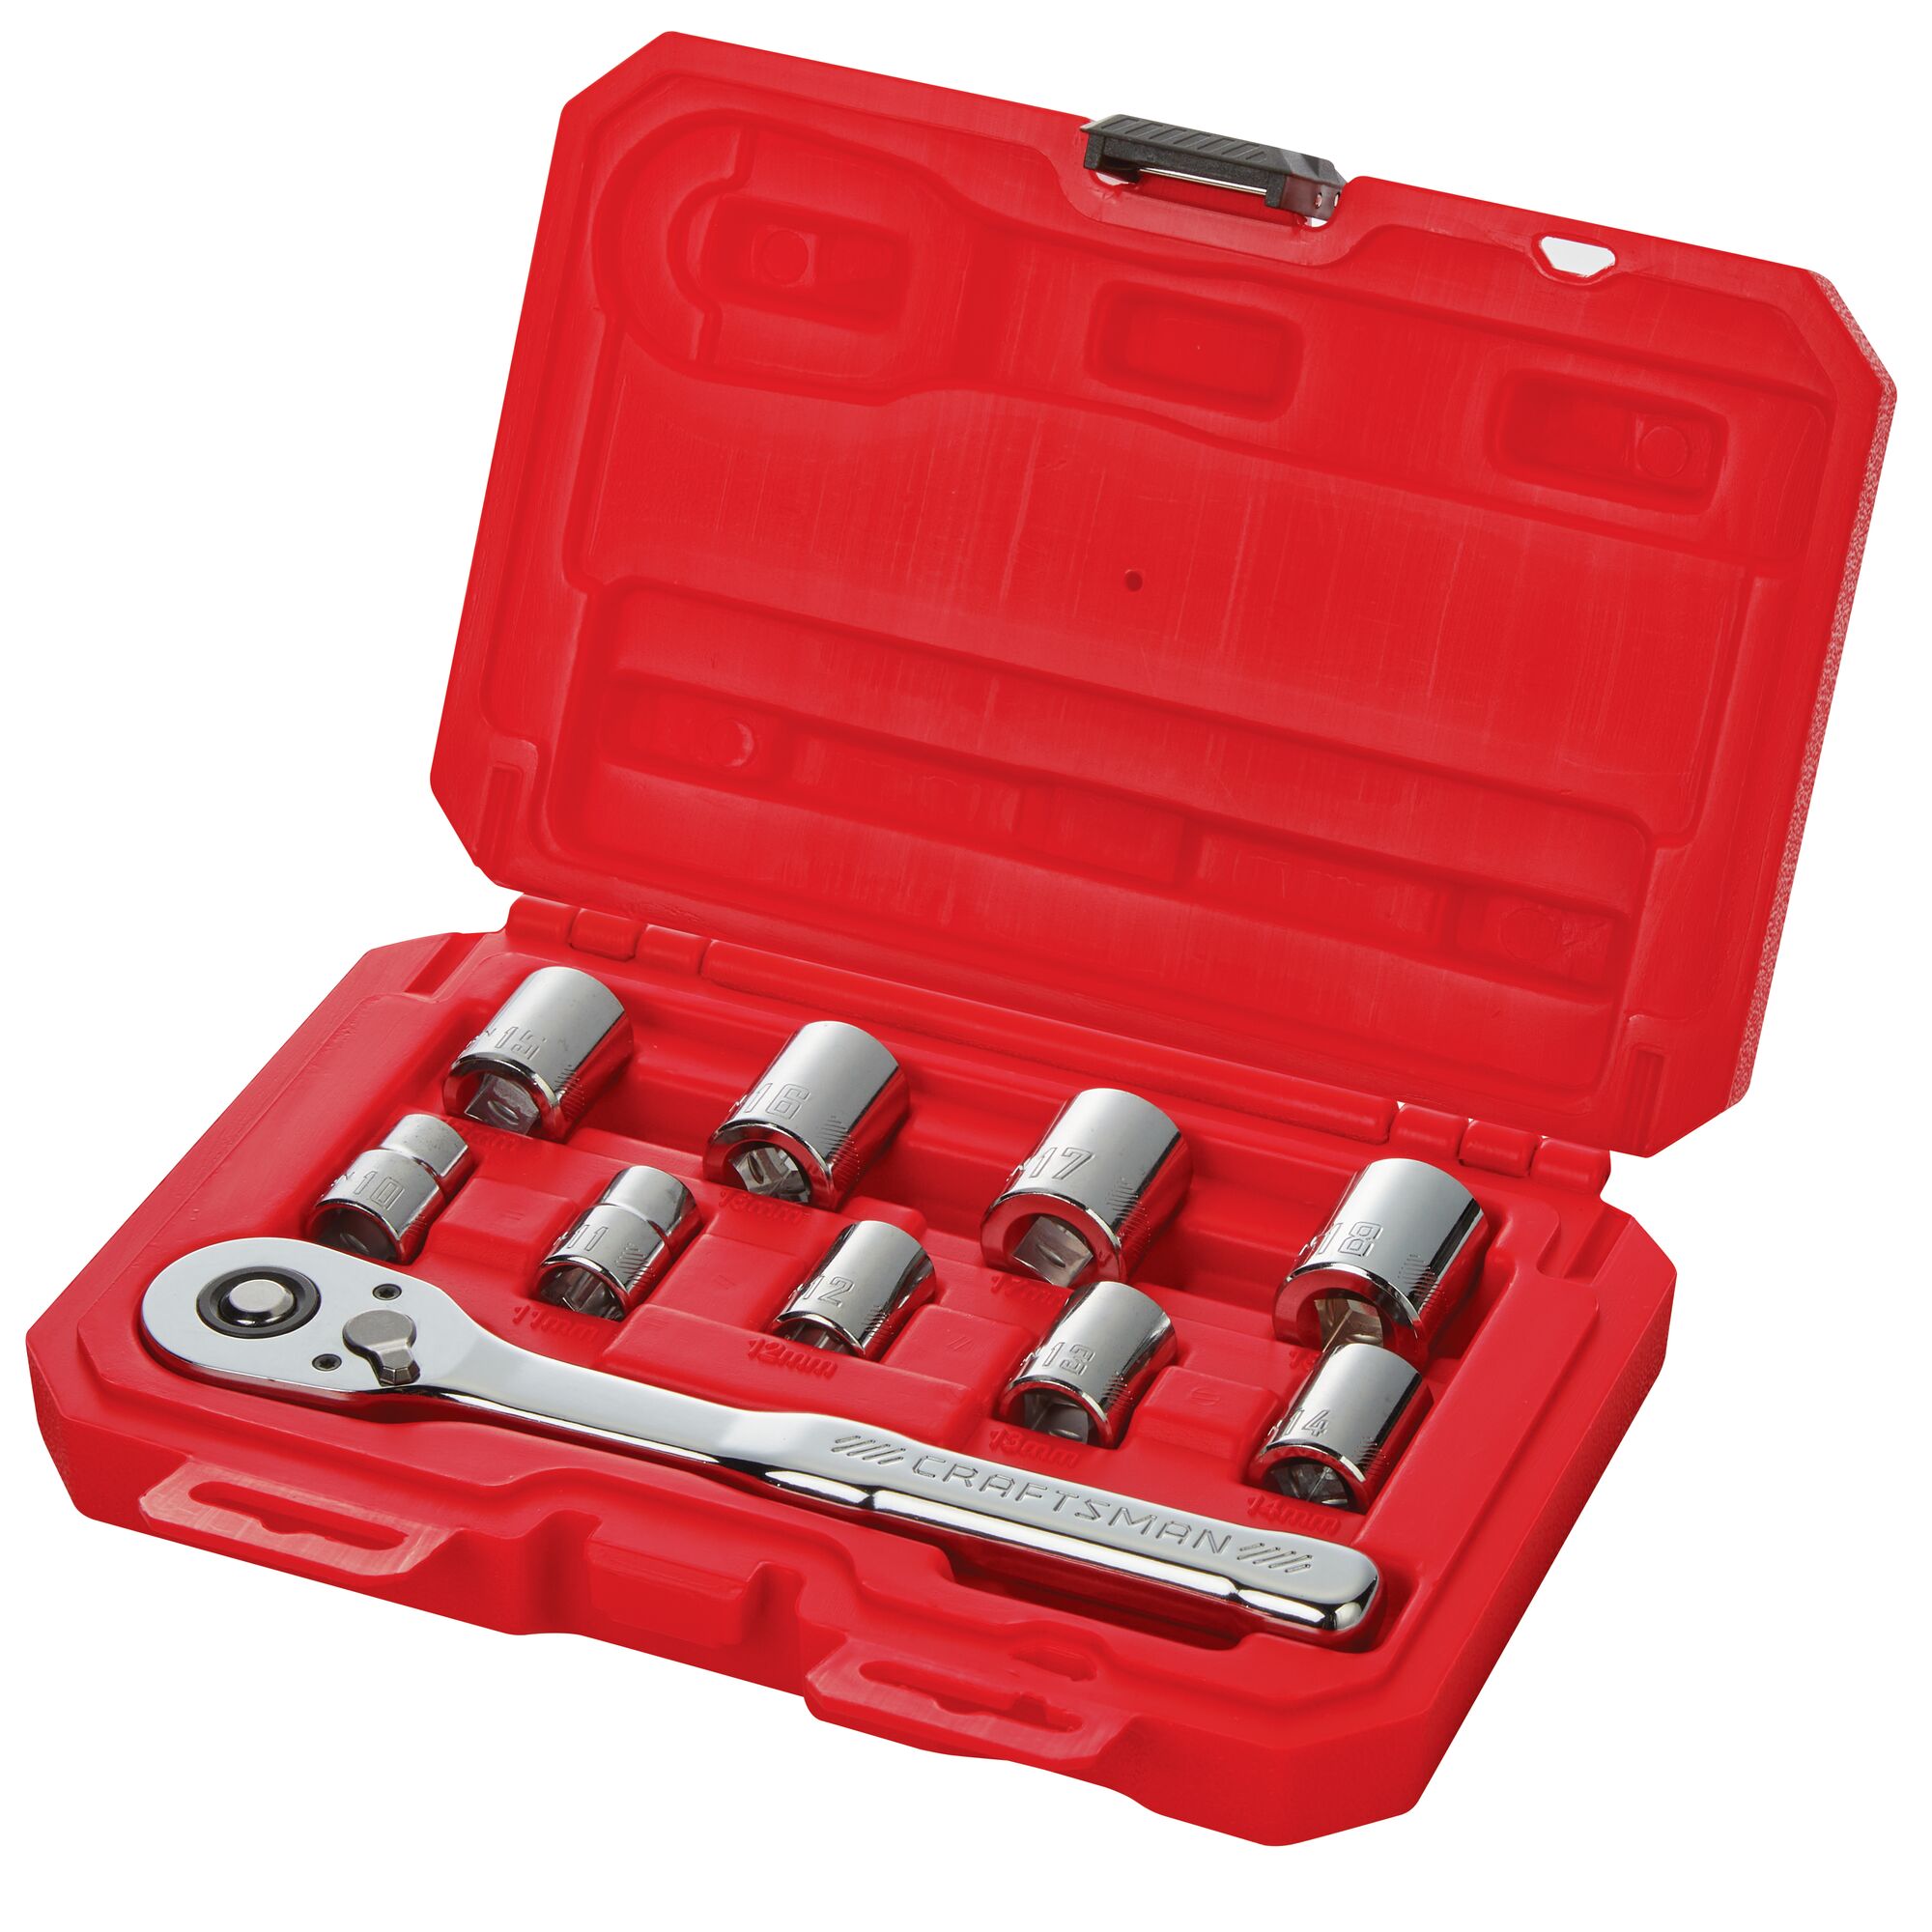 CRAFTSMAN 10 Piece 3/8 inch Metric Mechanics Tool Set in open red case